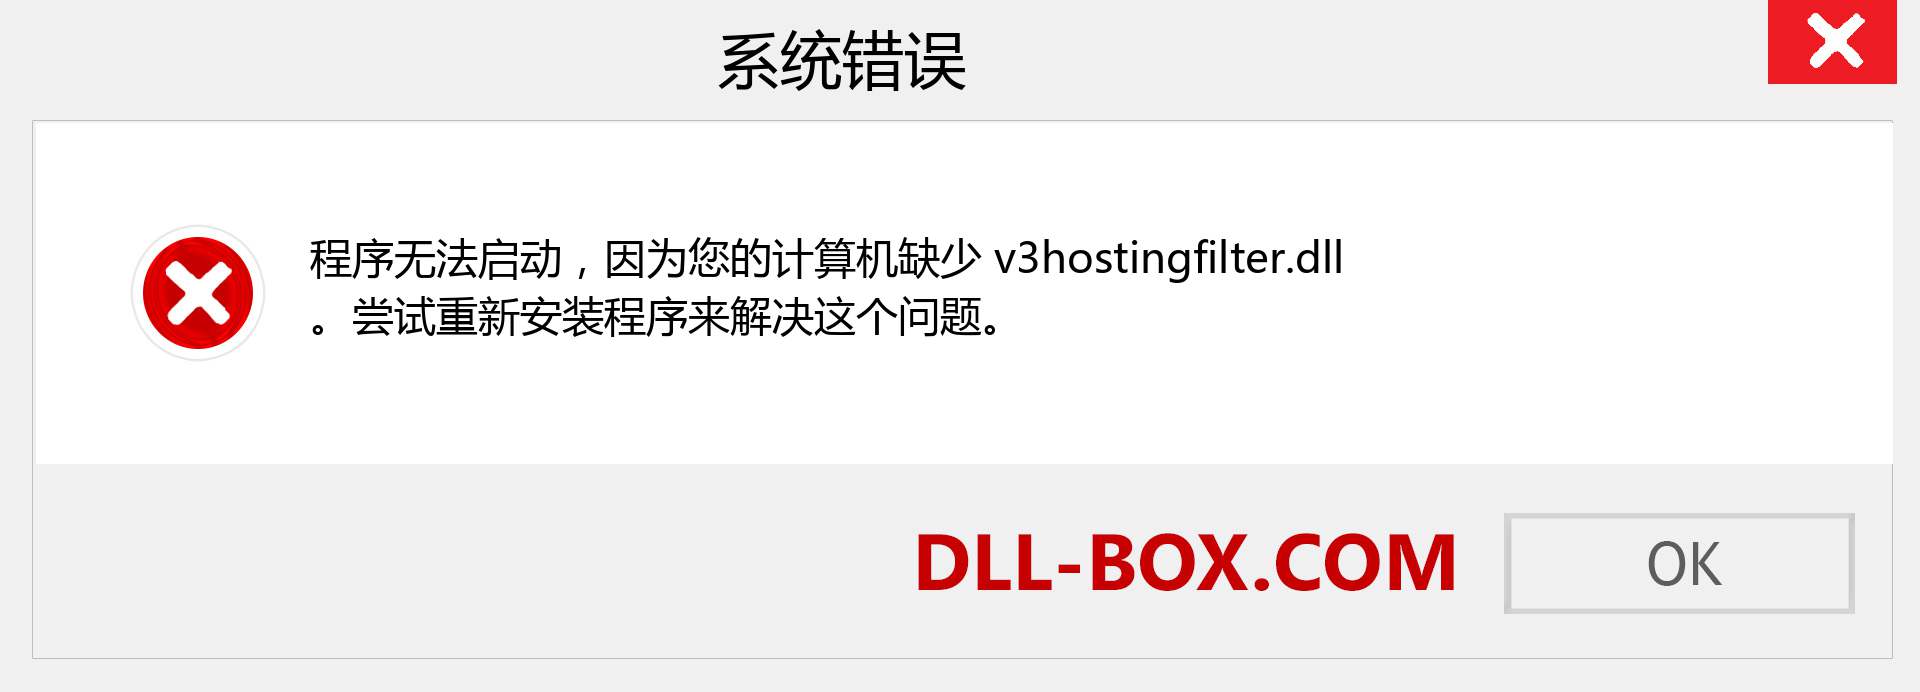 v3hostingfilter.dll 文件丢失？。 适用于 Windows 7、8、10 的下载 - 修复 Windows、照片、图像上的 v3hostingfilter dll 丢失错误